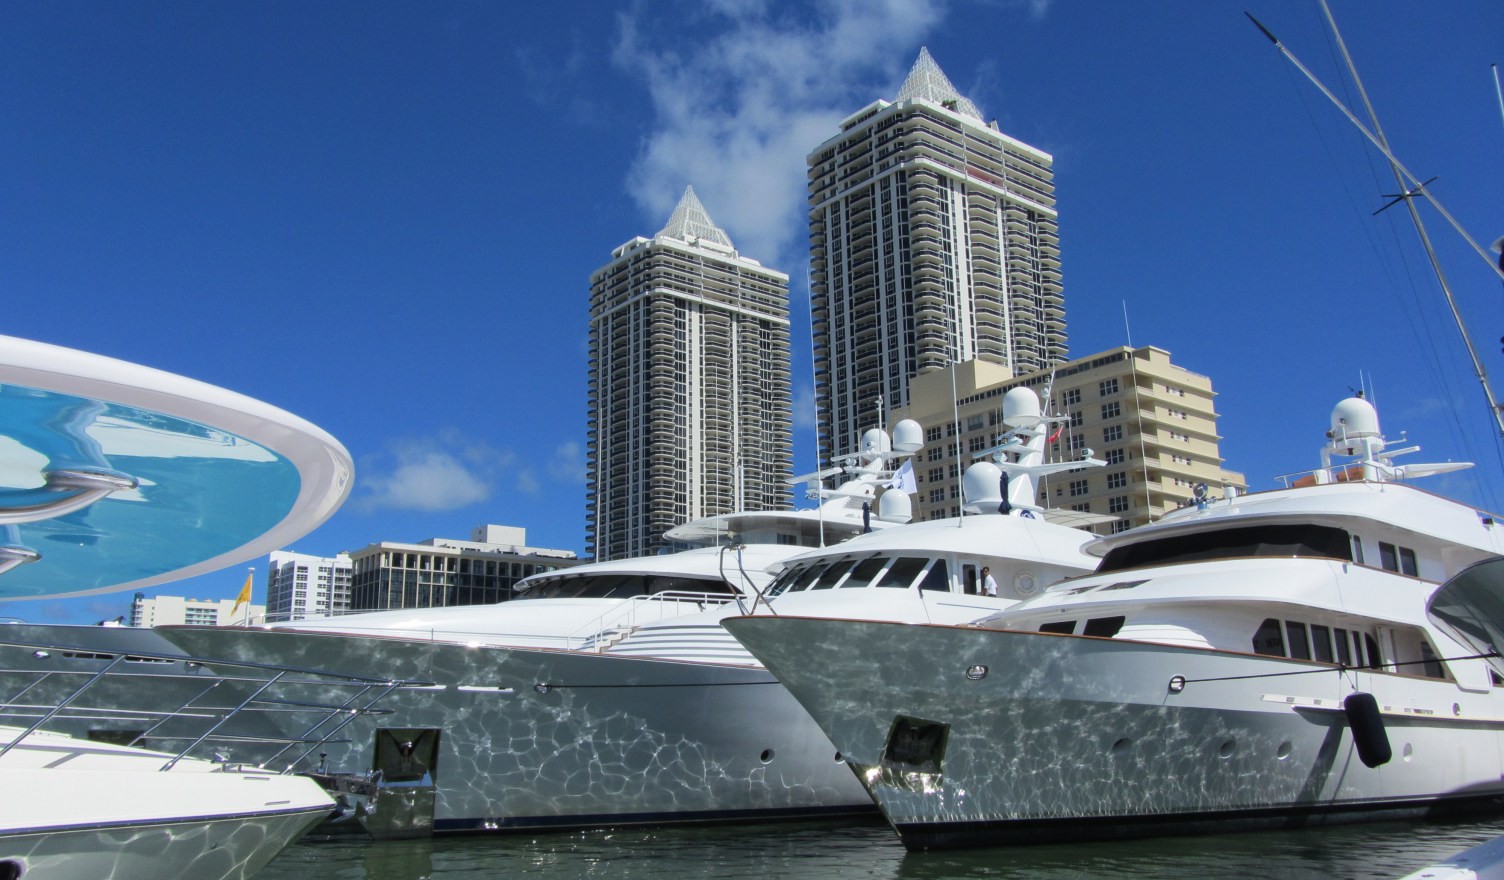 Miami Boat Show announces move to Marine Stadium - Motor Boat & Yachting